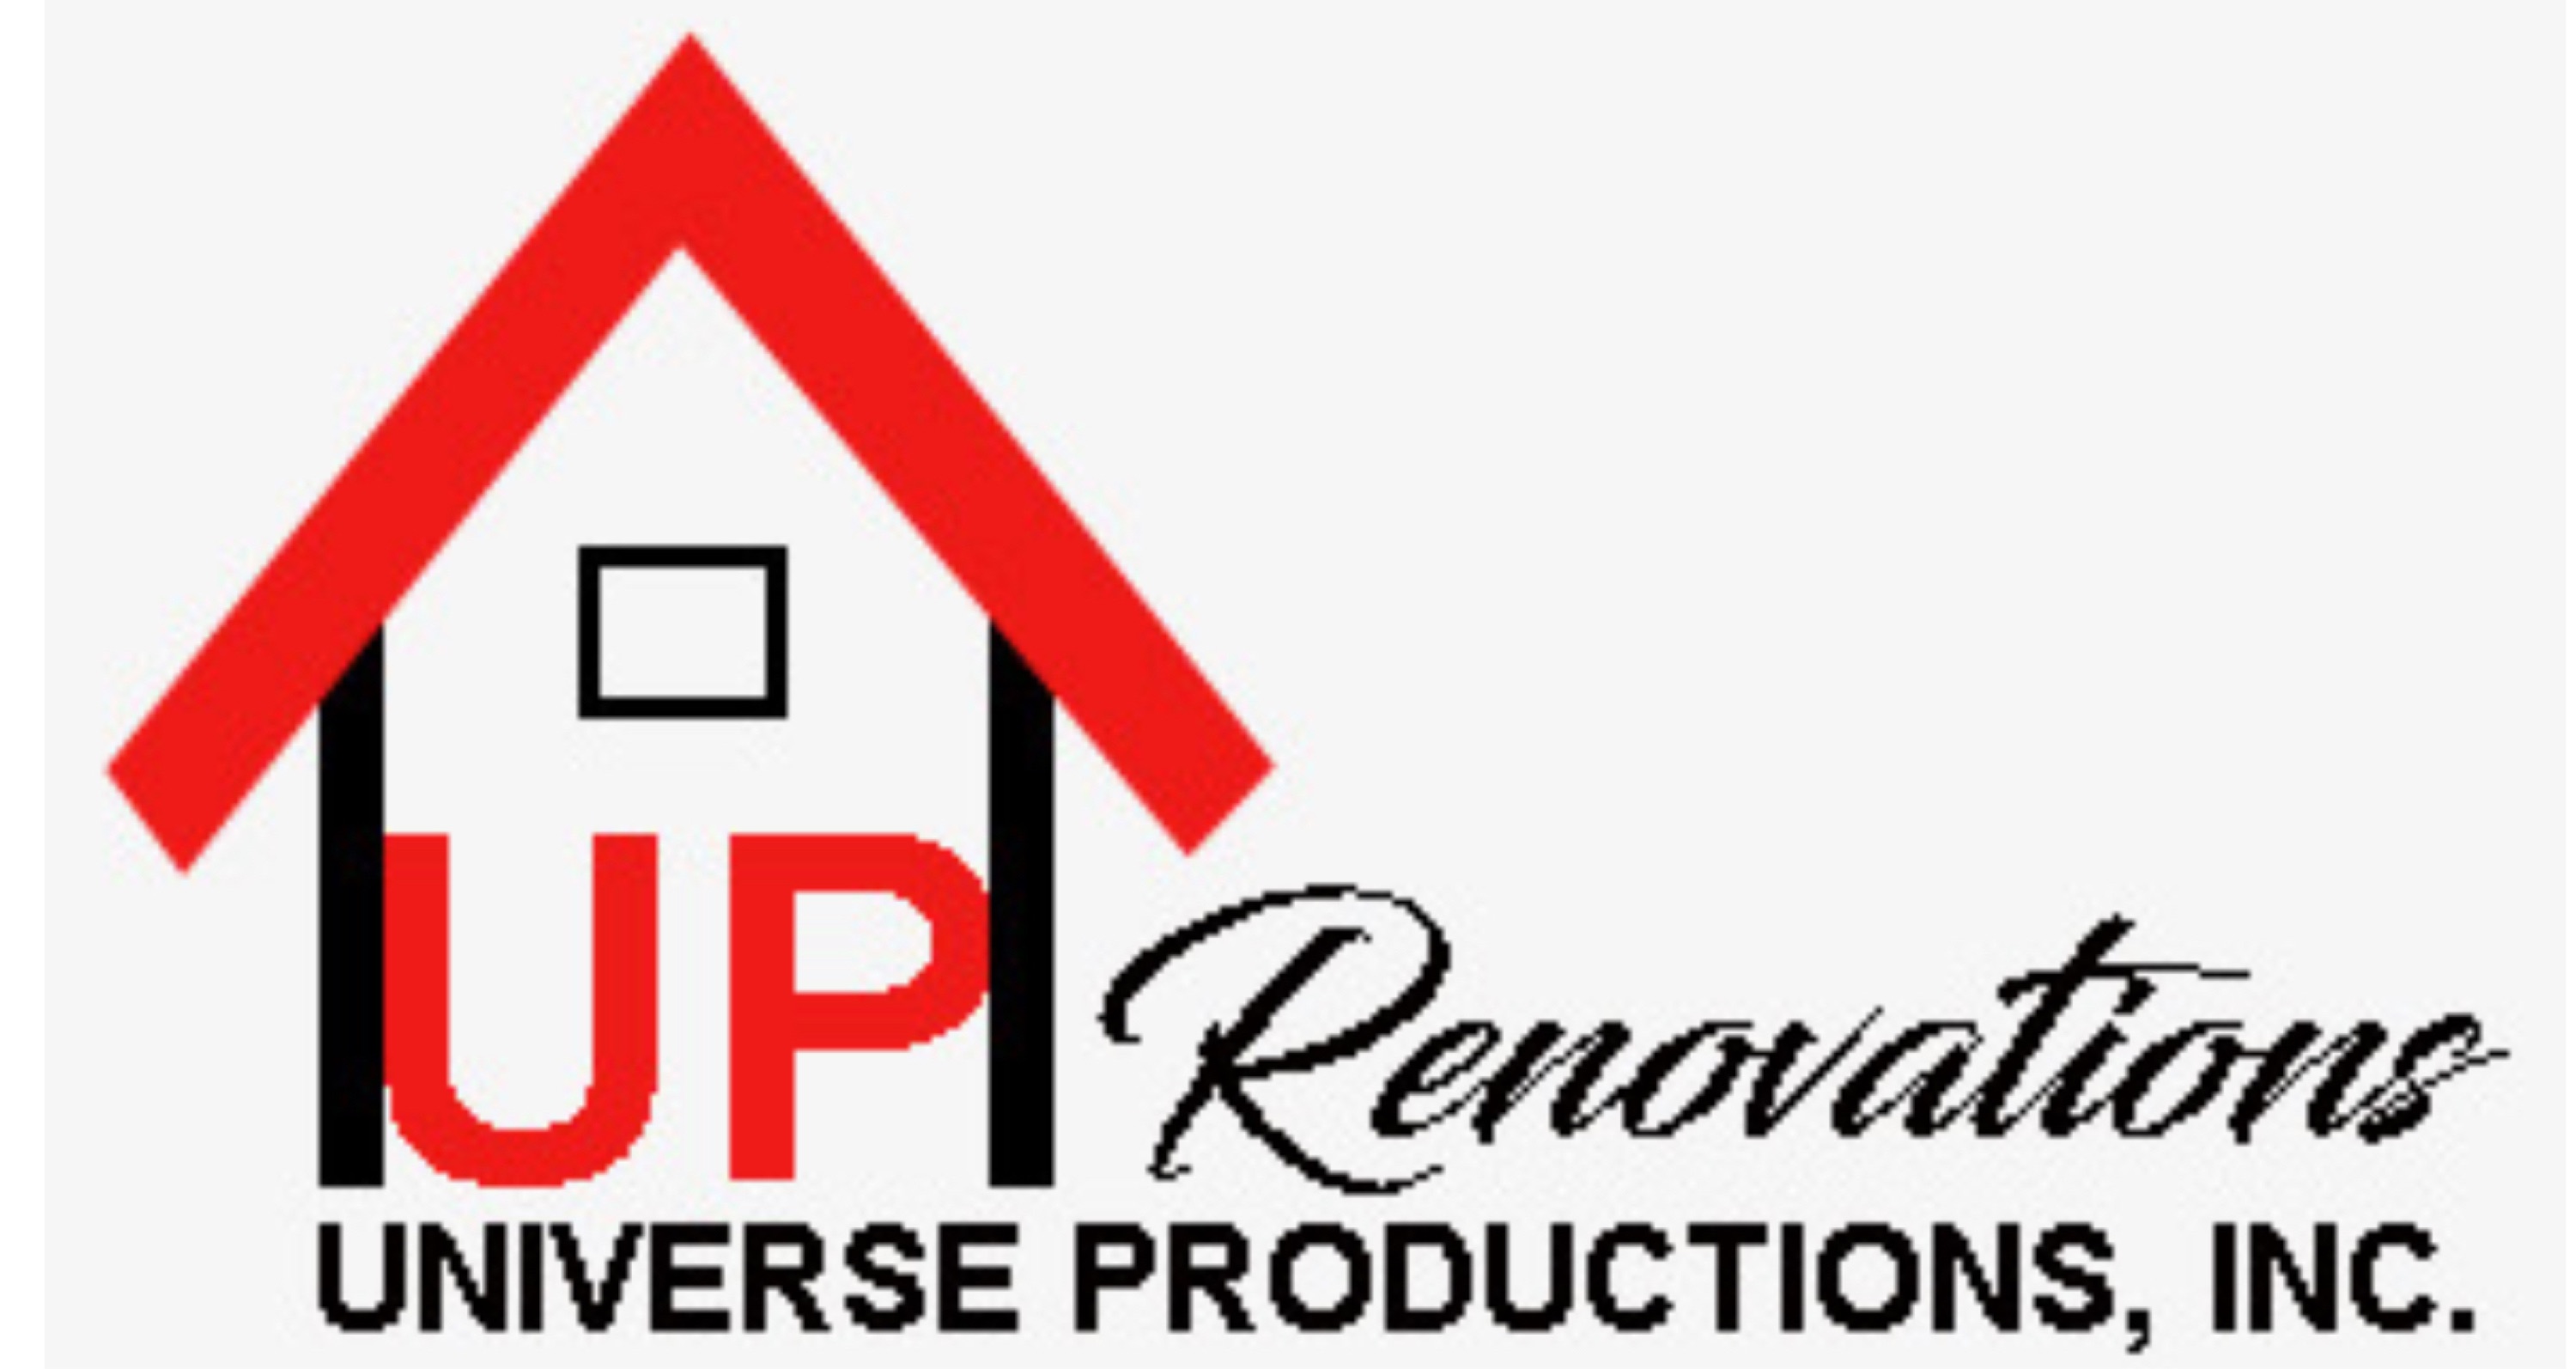 Universe Productions Logo